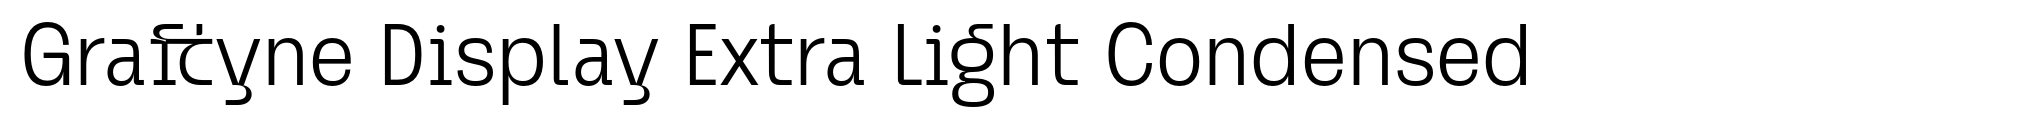 Graftyne Display Extra Light Condensed image